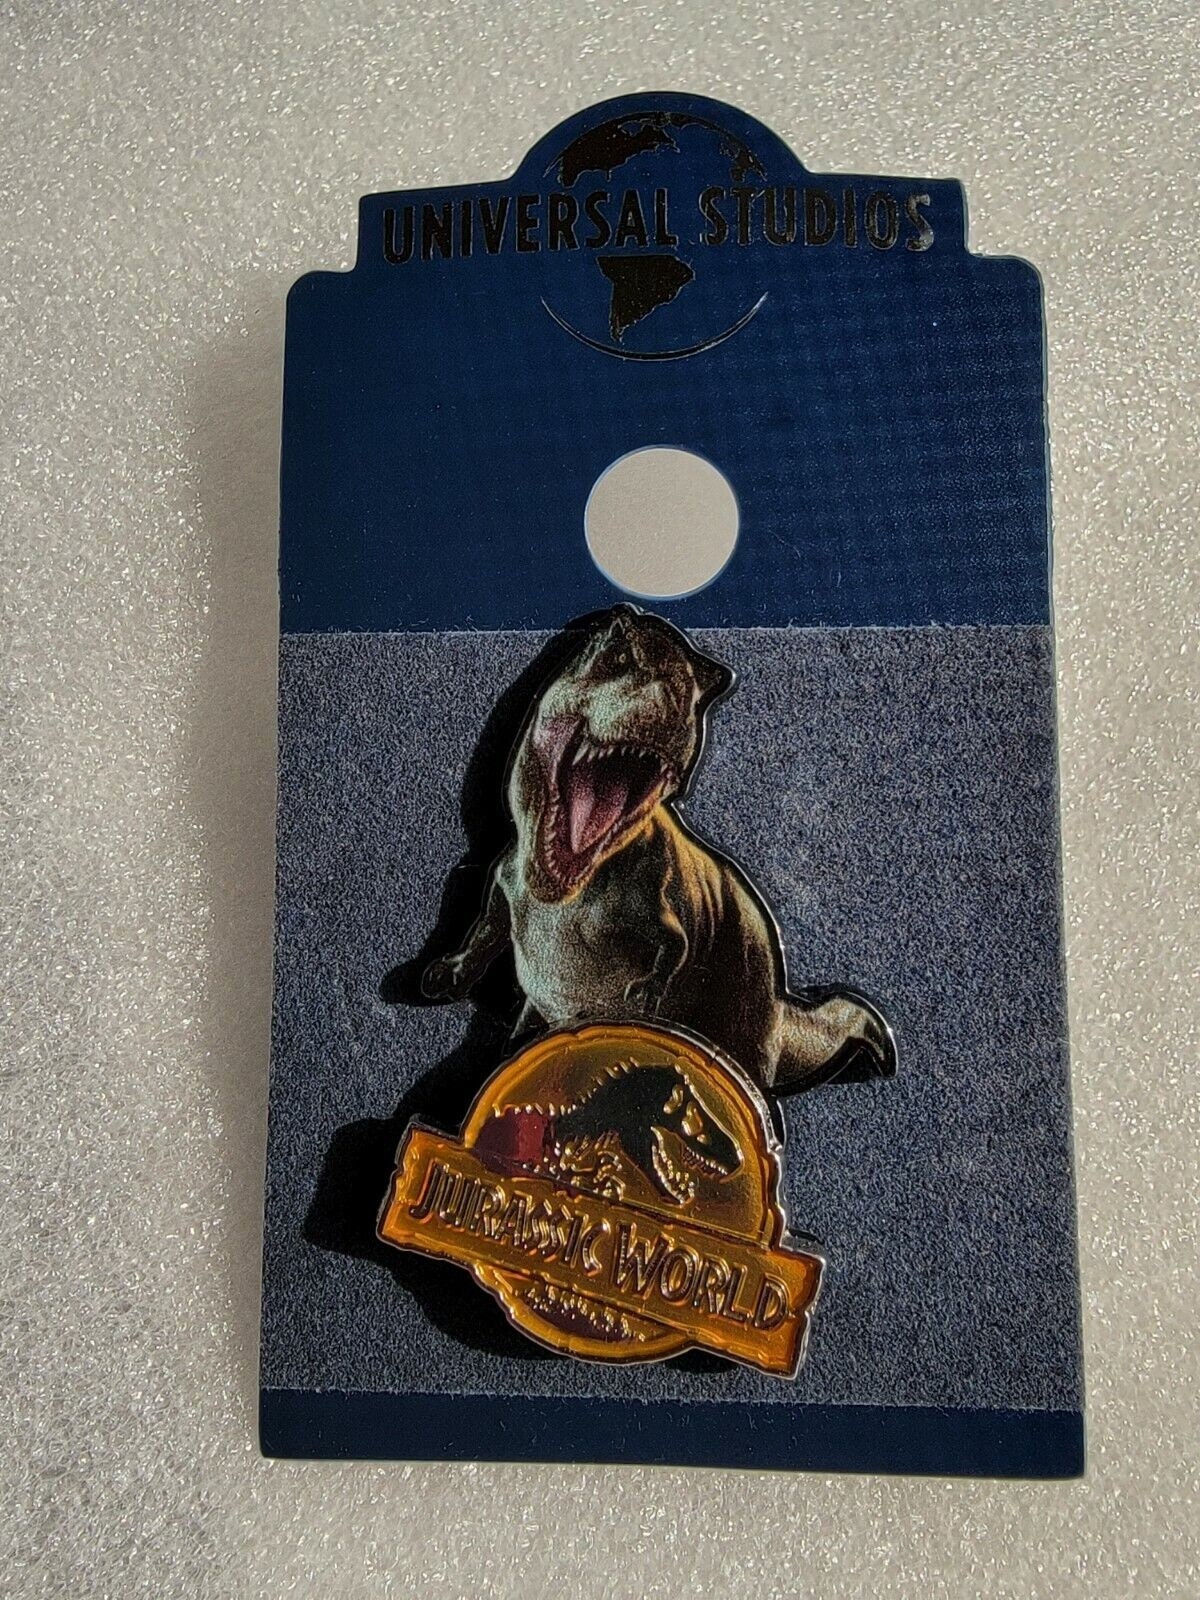 Pin by MartinKey on # Jurassic Park